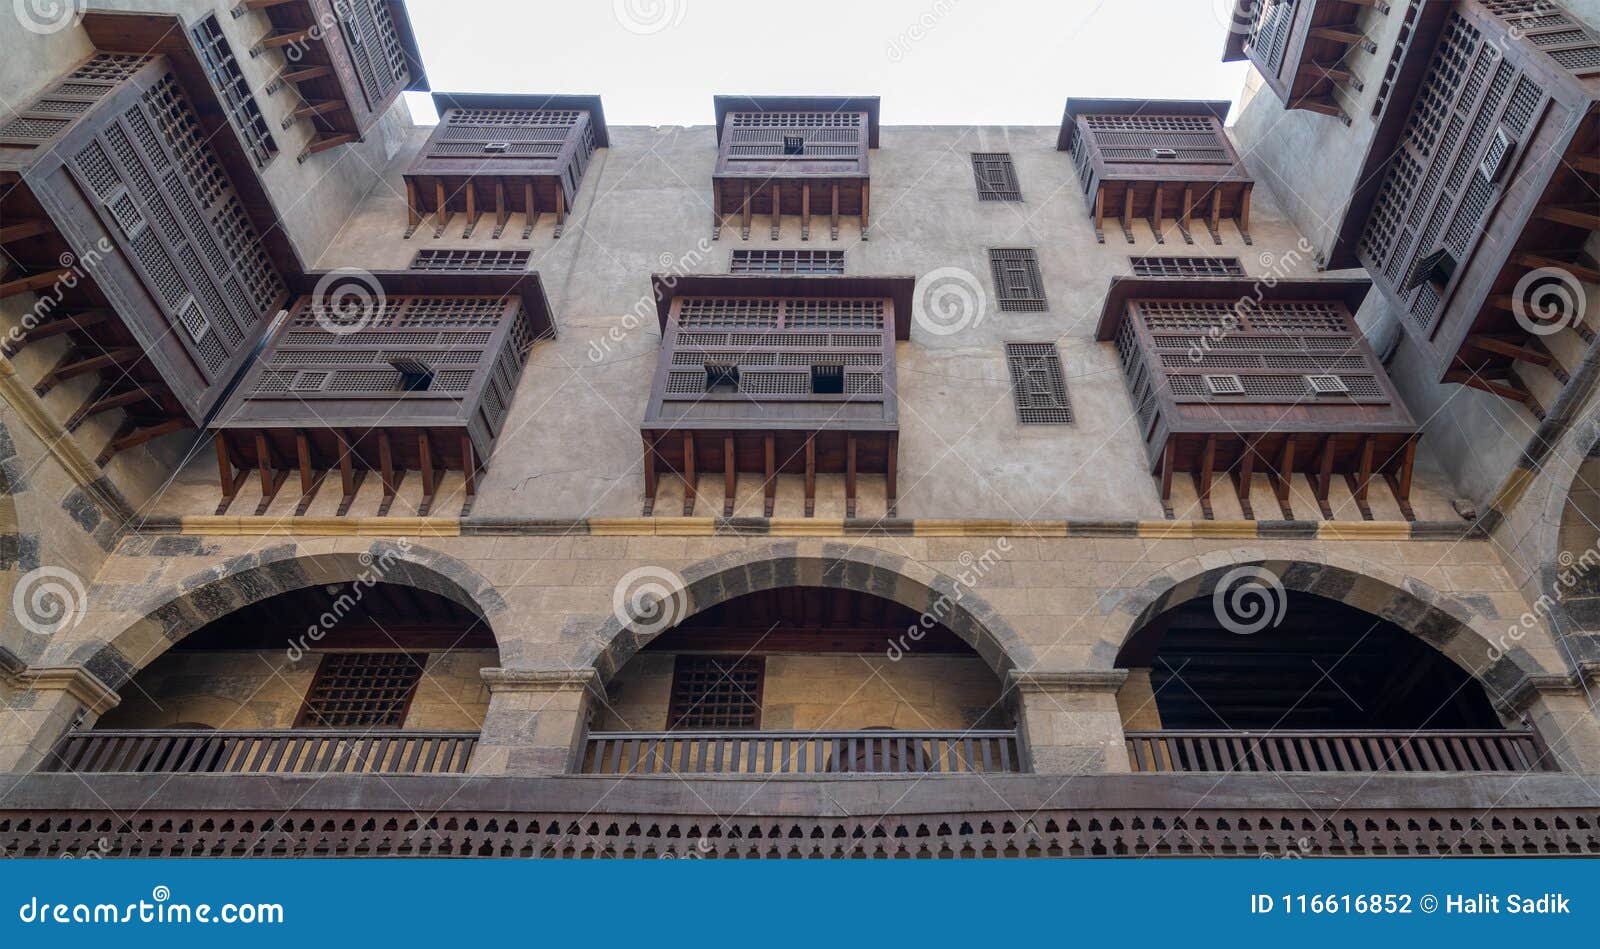 facade of caravansary wikala of al-ghuri, medieval cairo, egypt